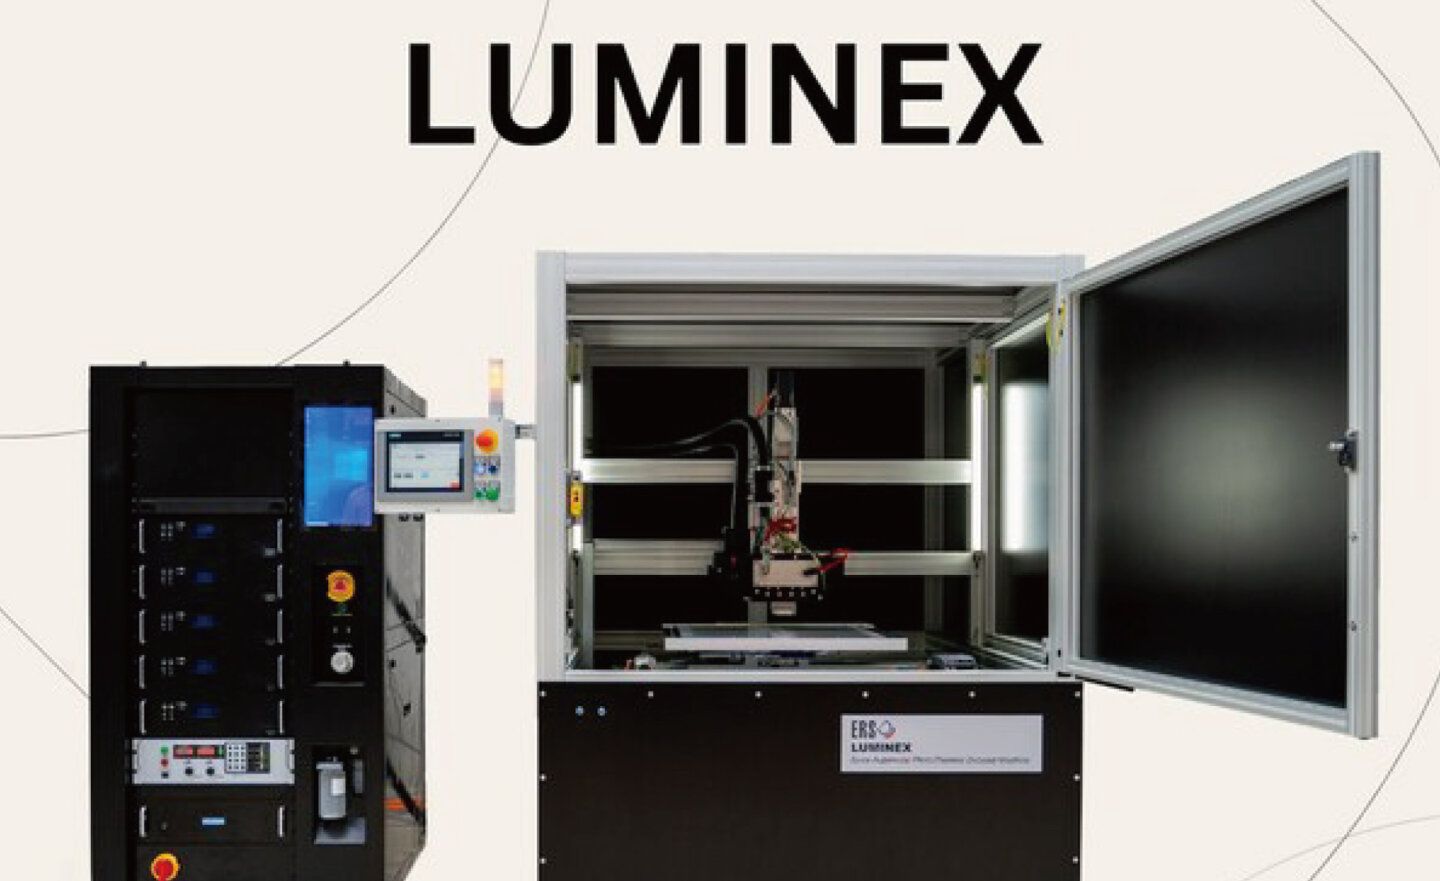 ERS 推出 Luminex 首台開創性光學拆鍵合技術的半自動設備